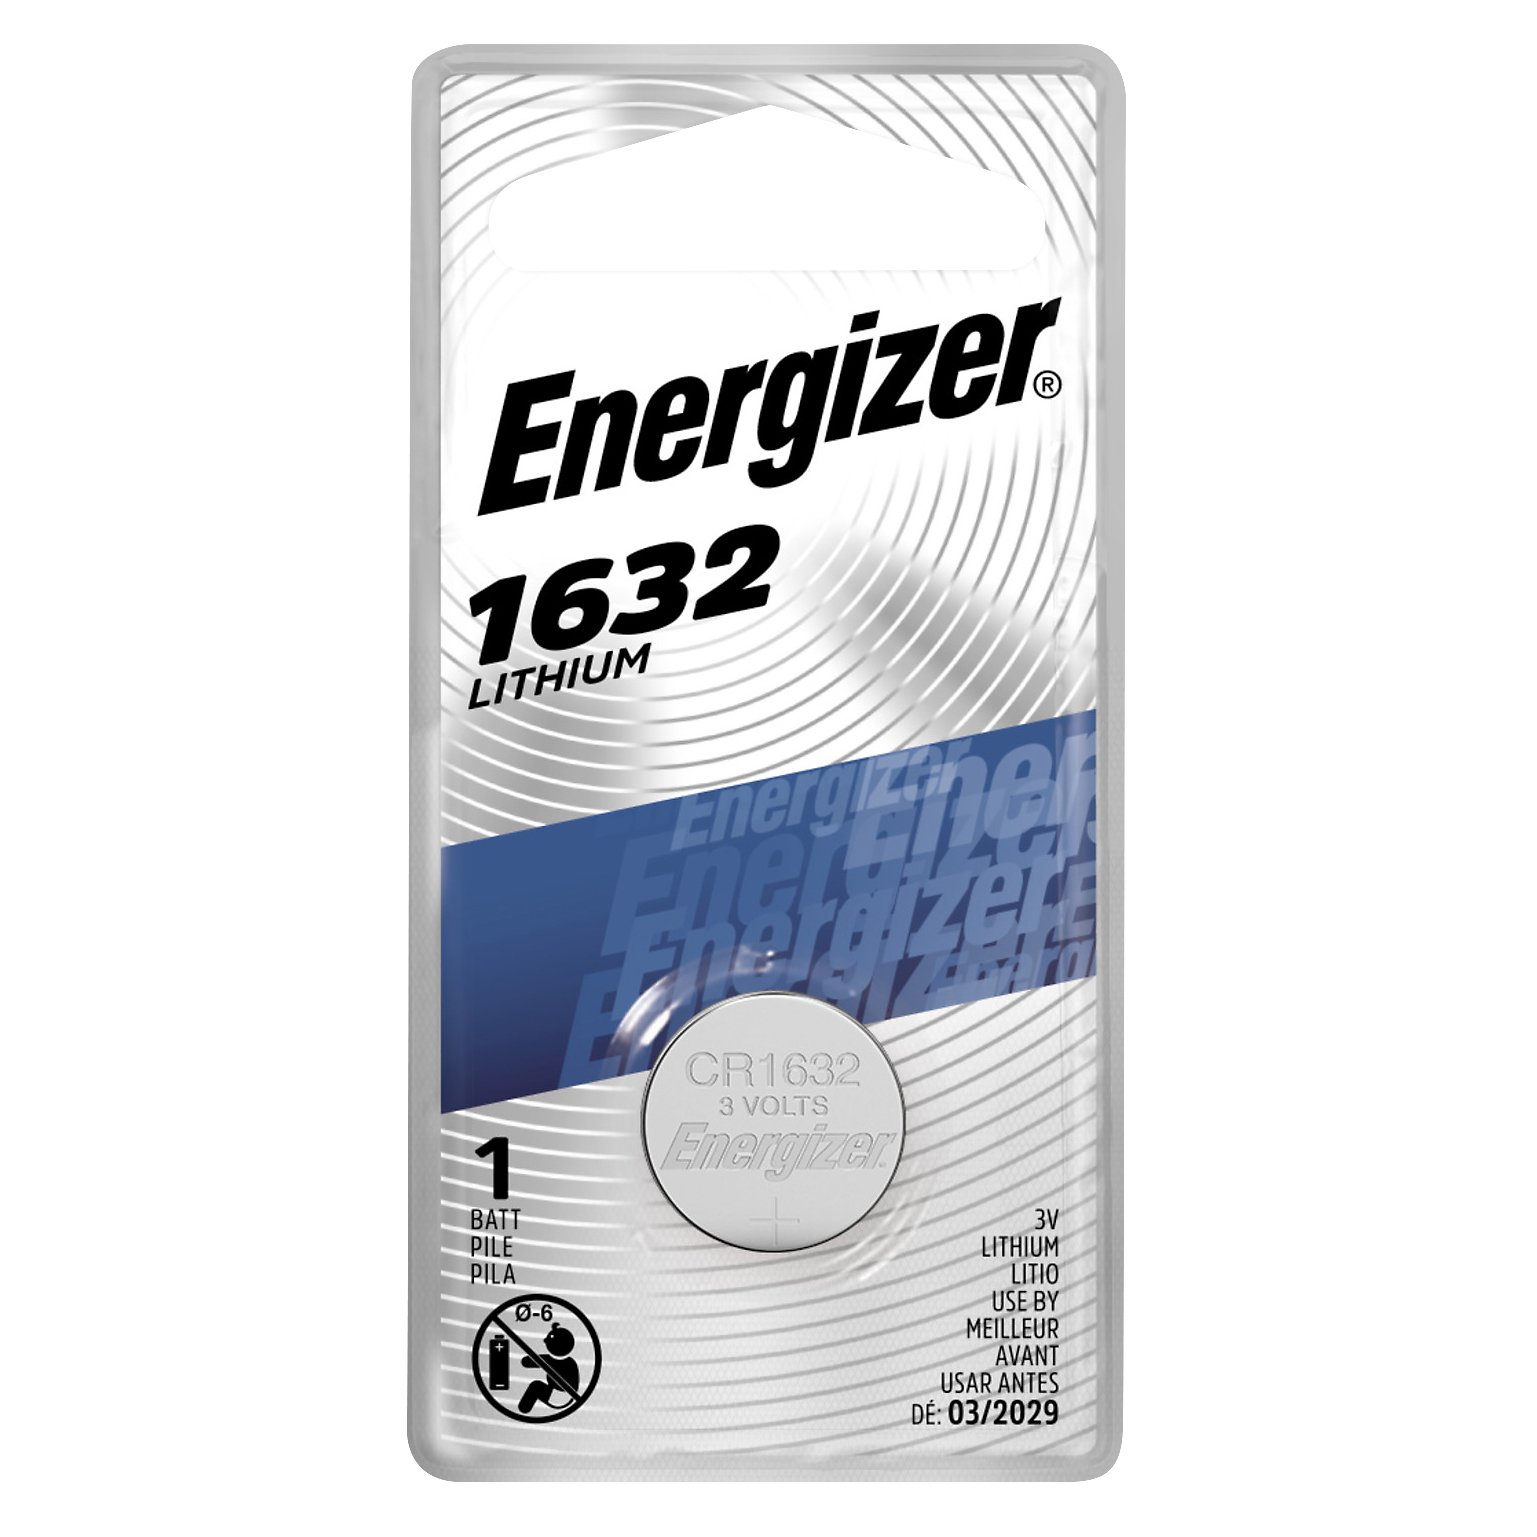 Energizer CR1632 Lithium Coin Battery - Shop Batteries at H-E-B